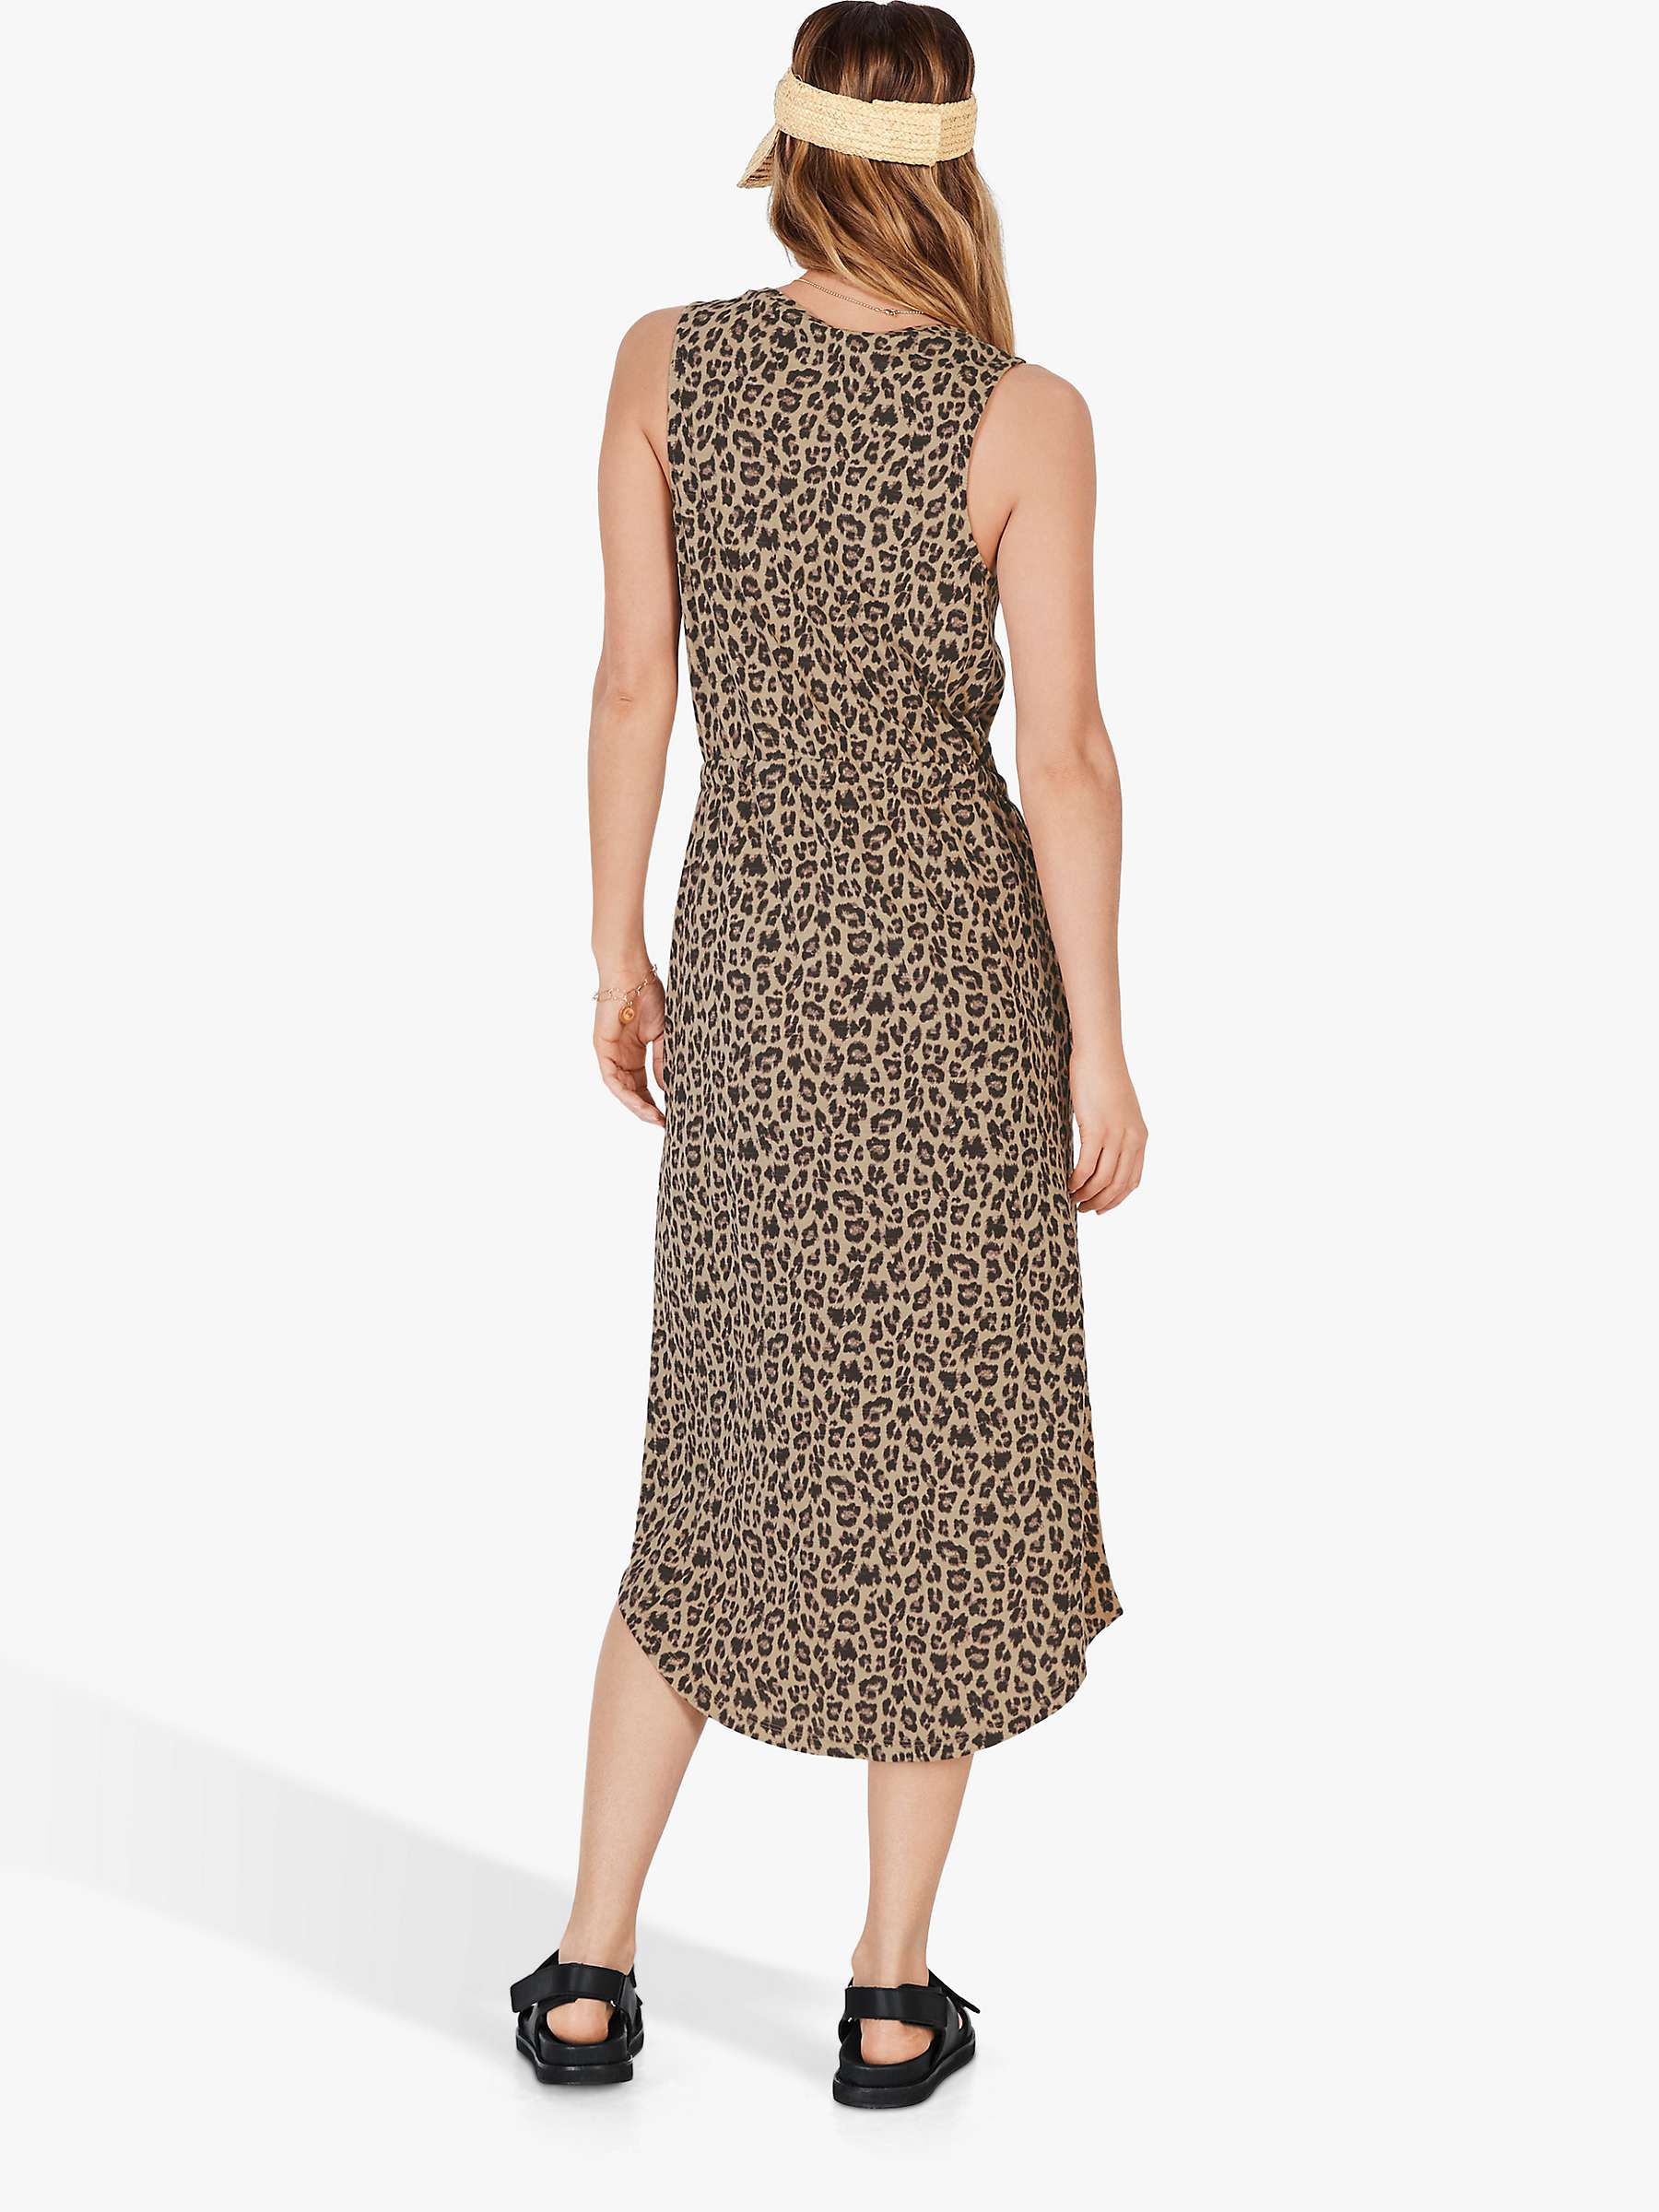 Buy hush Leopard Print Drawstring Waist Jersey Dress, Multi Online at johnlewis.com